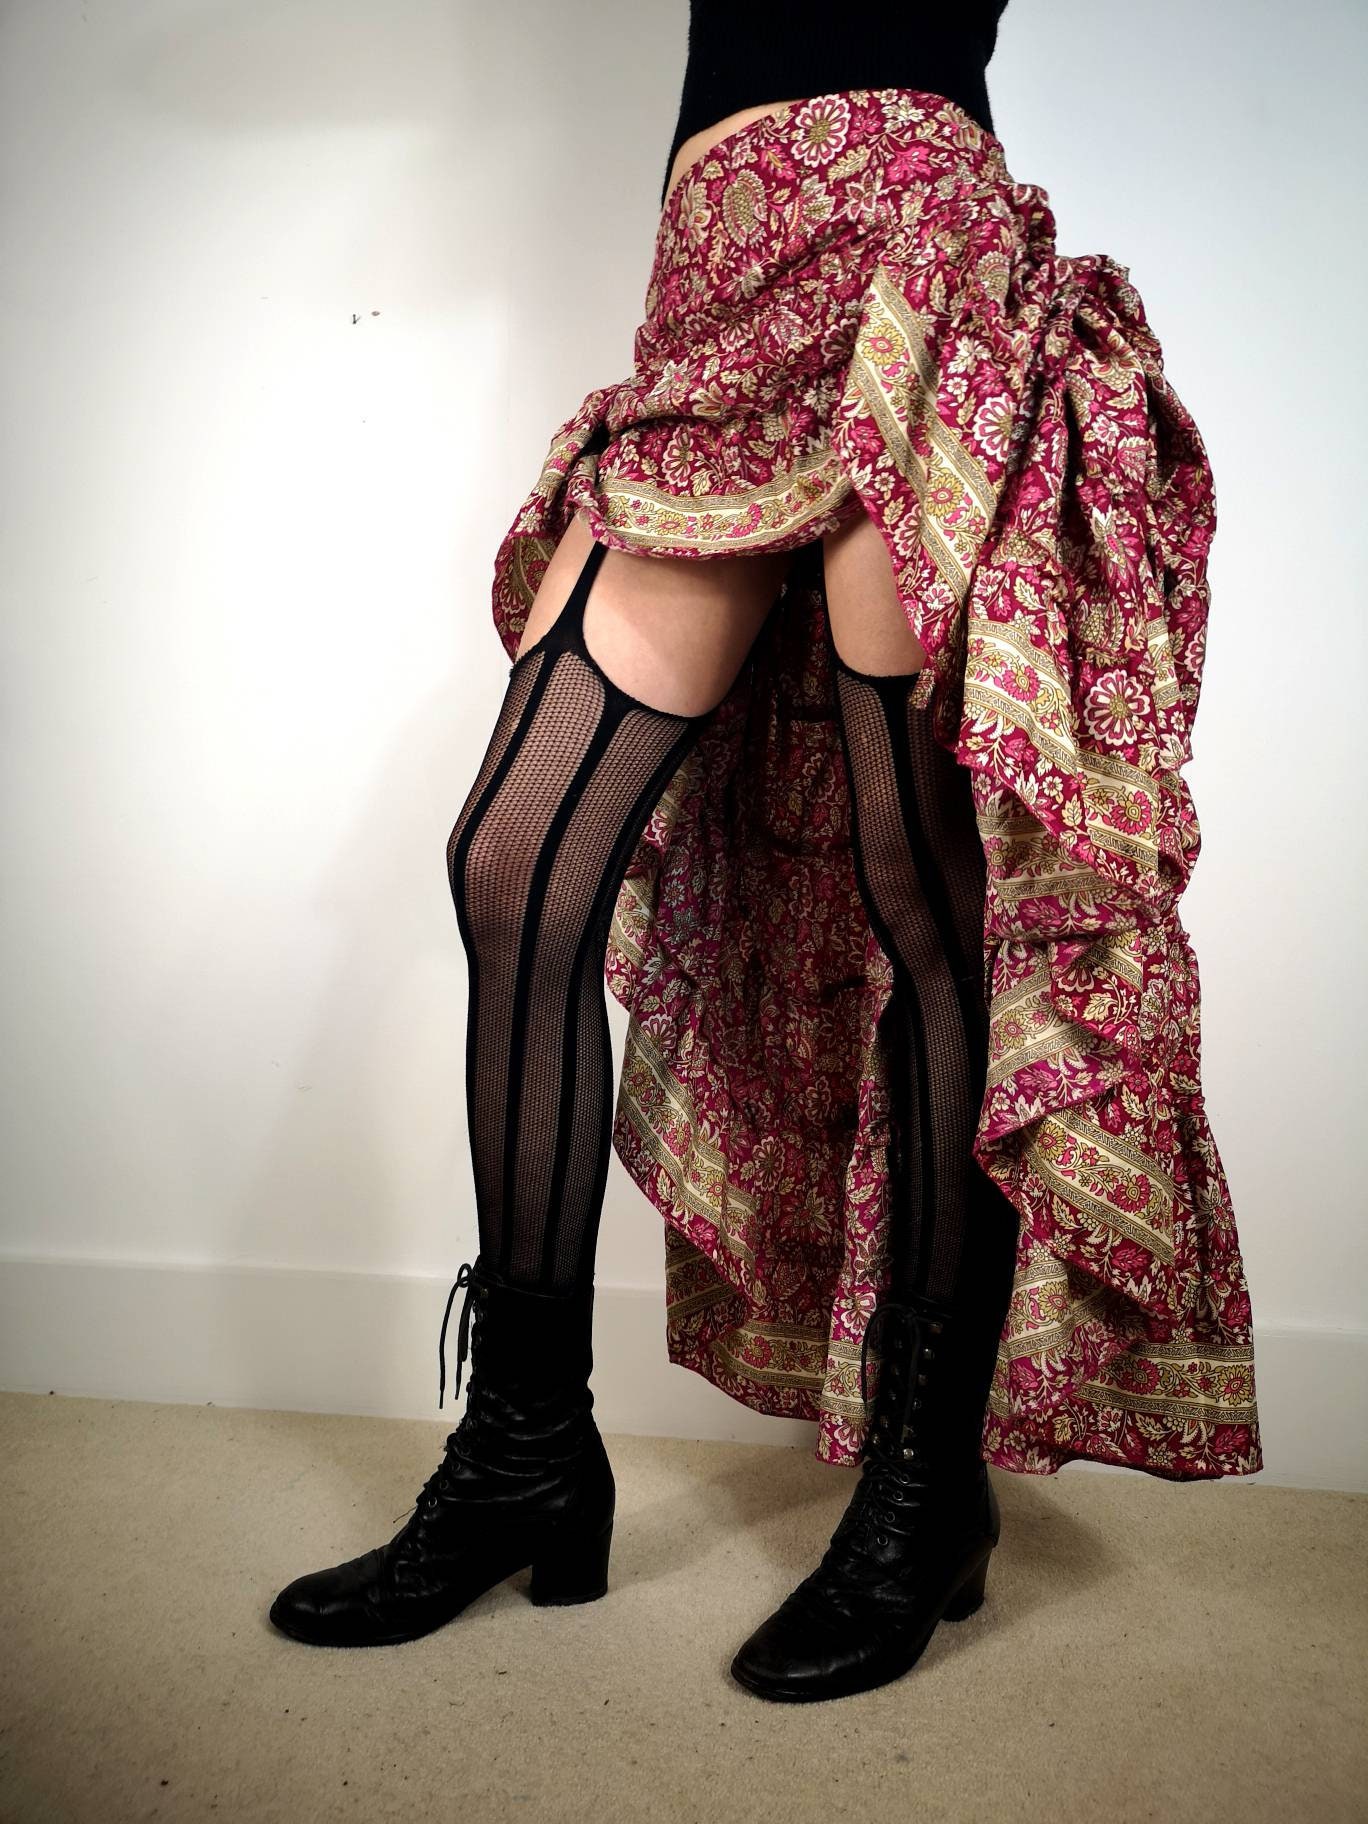 Falda Steampunk, falda pirata, falda asimétrica, falda de encaje